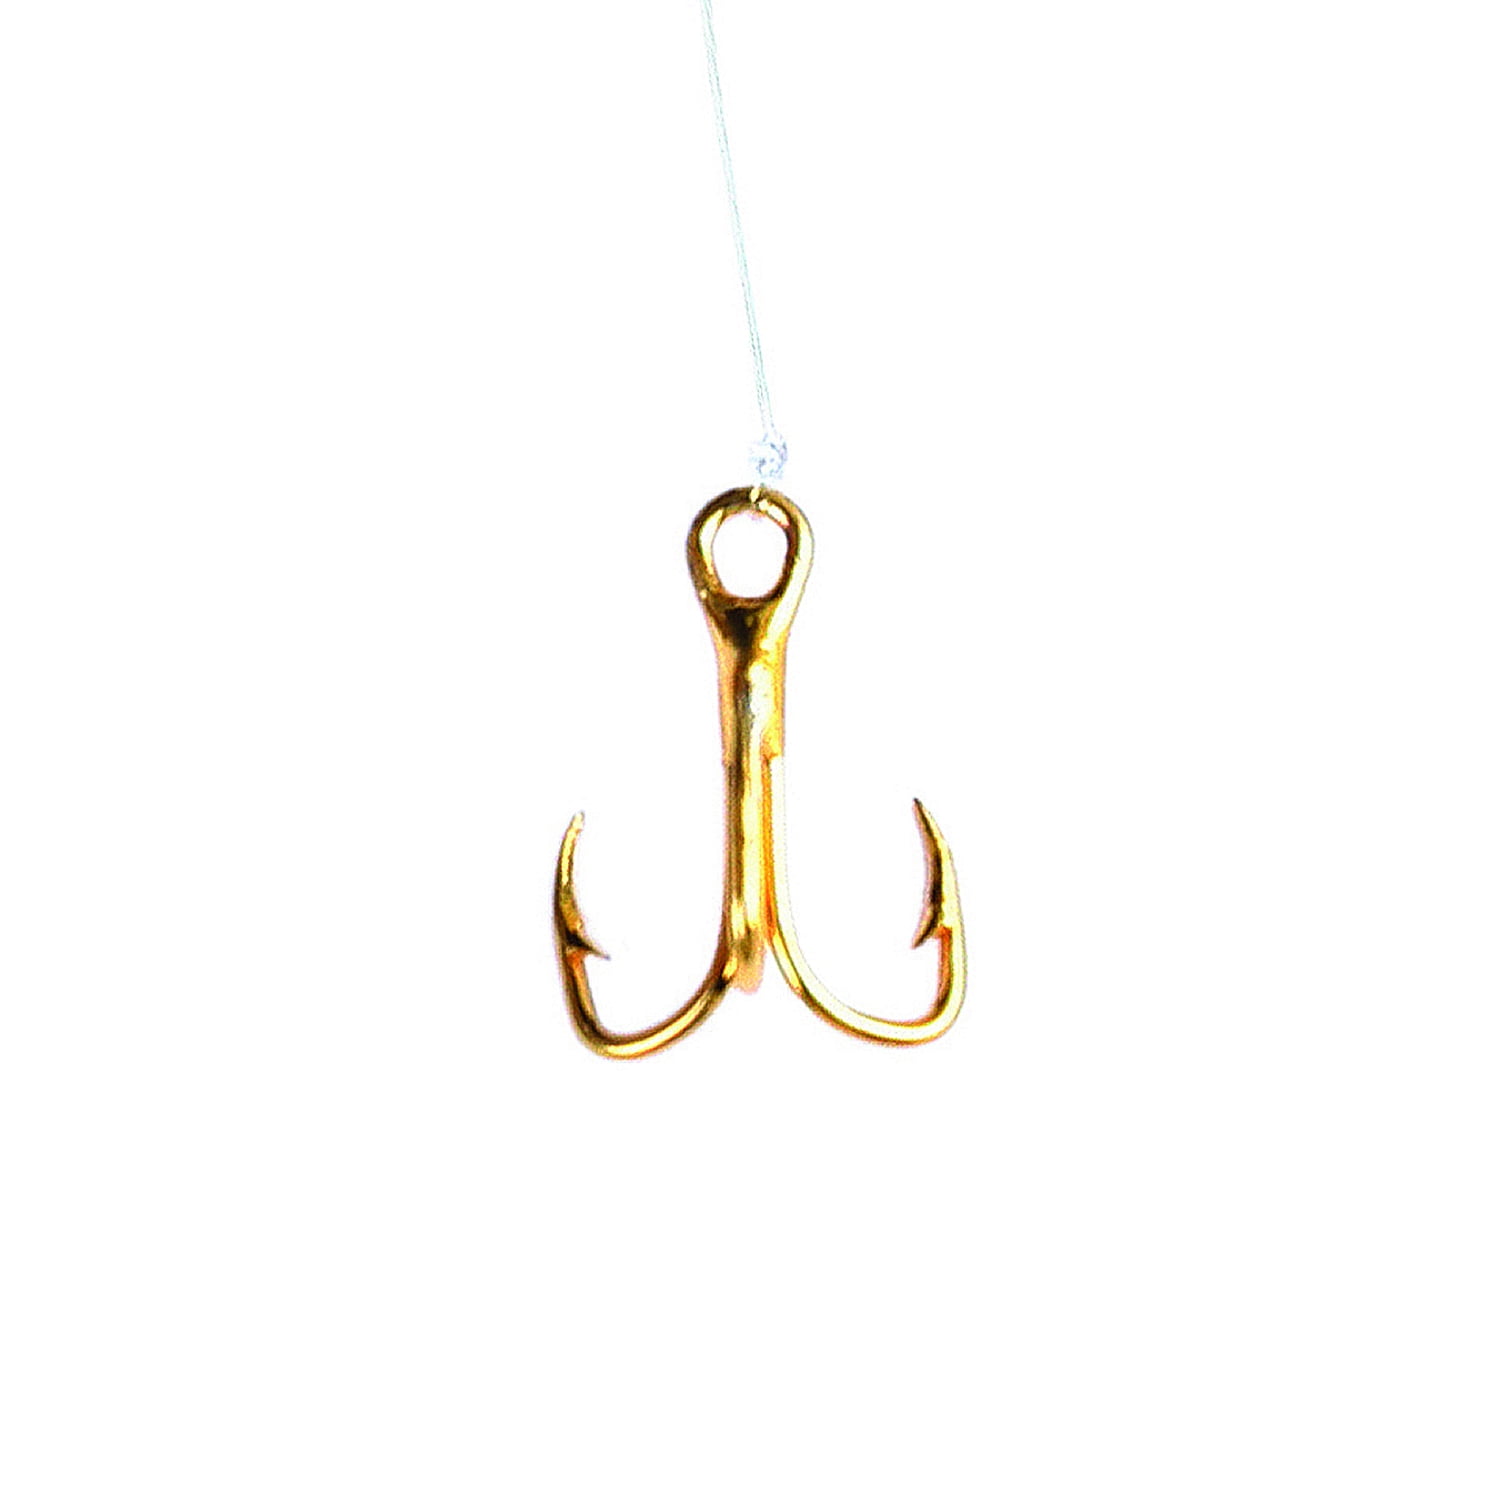 50 Quality Gold Treble Trout, Fish Fishing Hooks Size #16 | A4